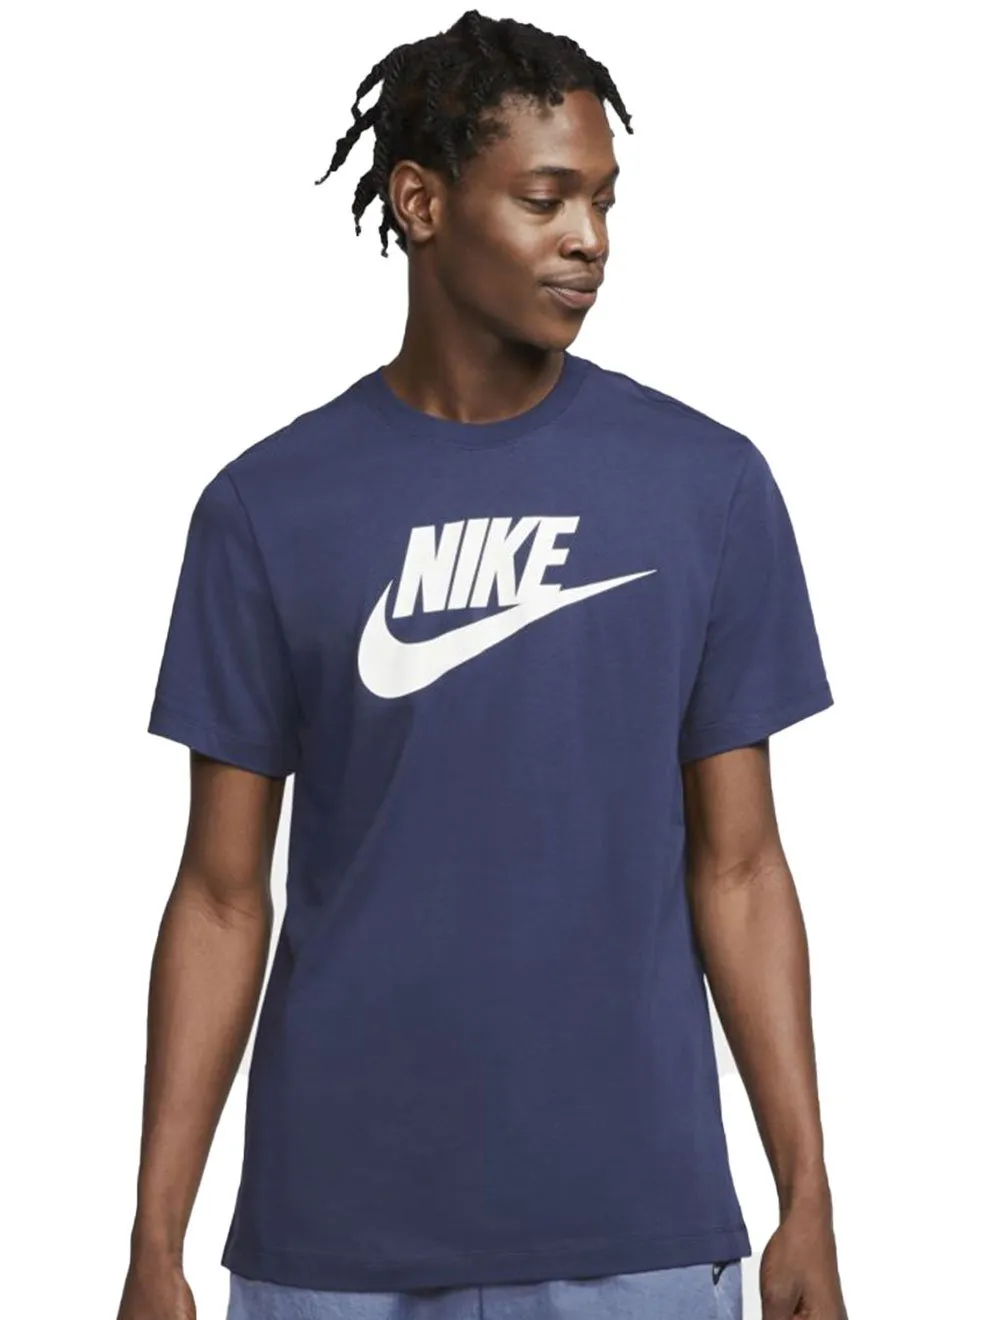 Democratie Uitpakken Snel Camiseta Nike Masculina Sportswear Large Logo Azul Marinho | Secret Outlet